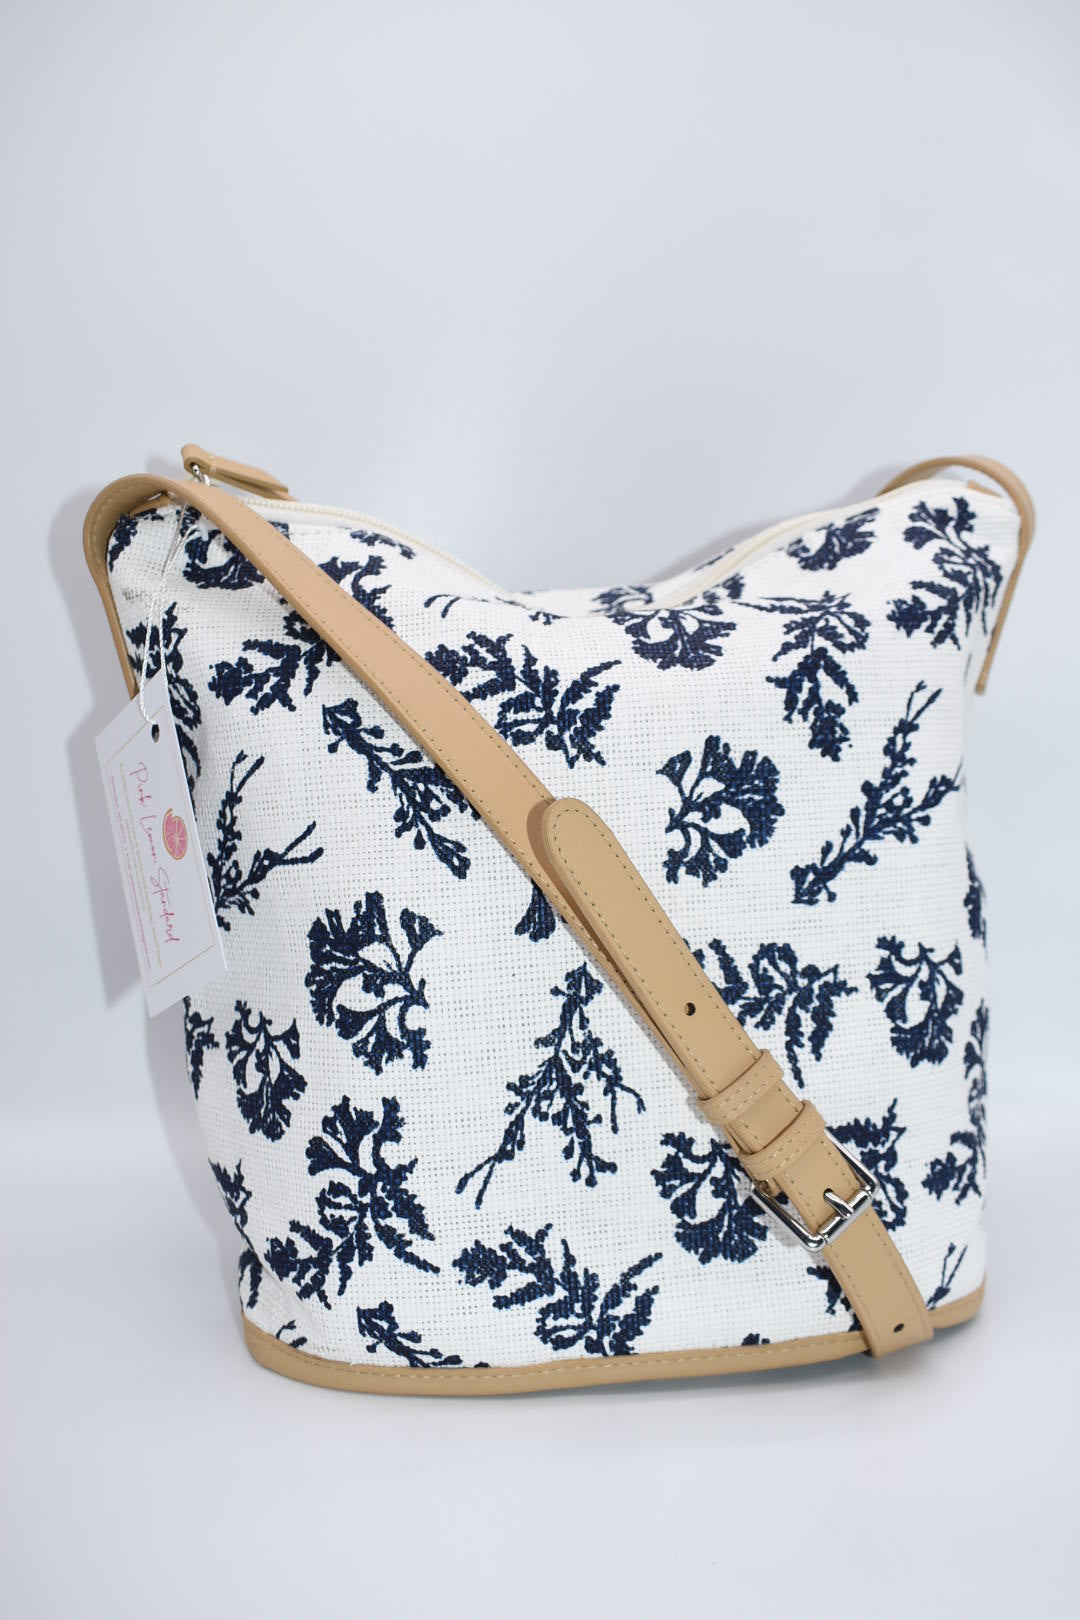 Vera Bradley Straw Bucket Crossbody Bag in "Adrift Coral Blue" Pattern